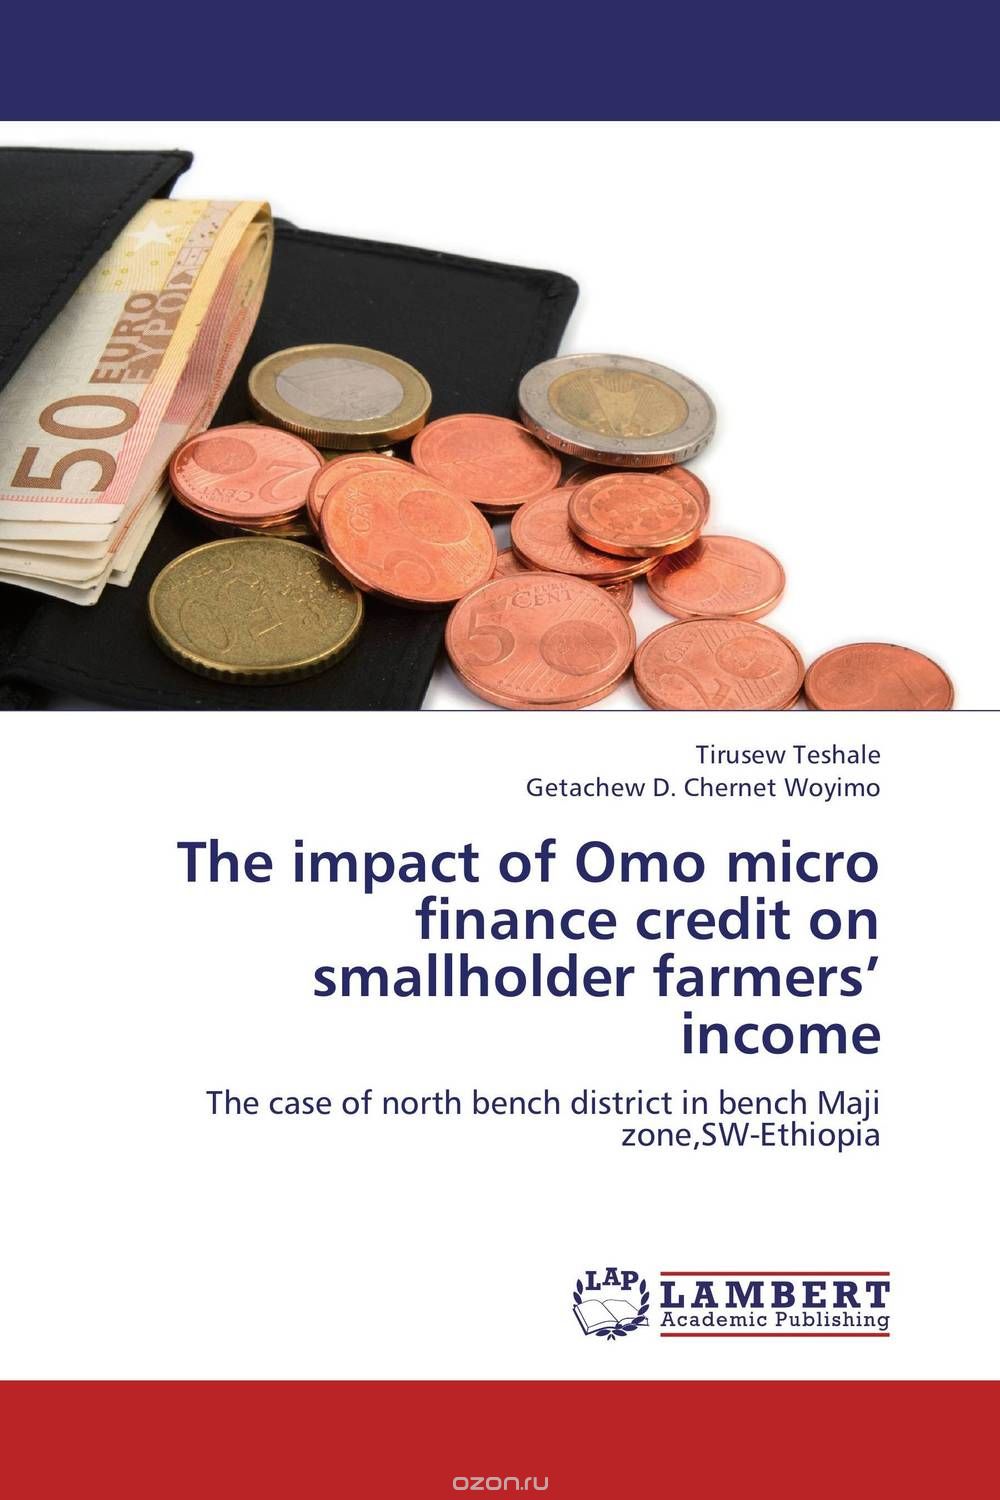 Скачать книгу "The impact of Omo micro finance credit on smallholder farmers’ income"